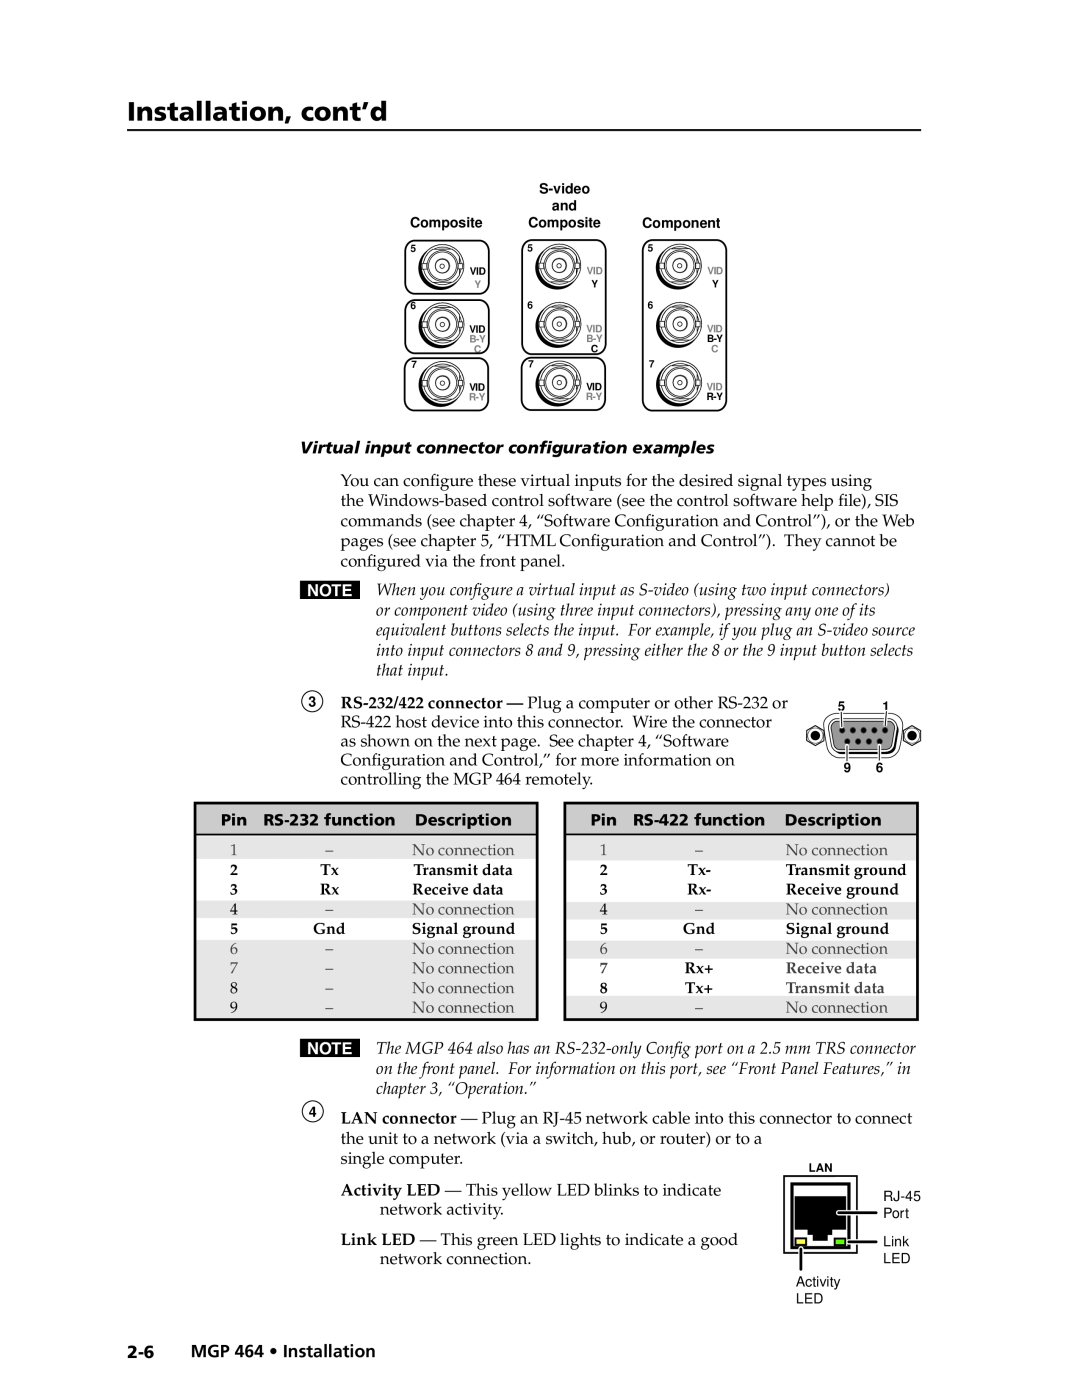 Extron electronic MGP 464 DI manual Preliminary, Installation, cont’d, Virtual input connector configuration examples 